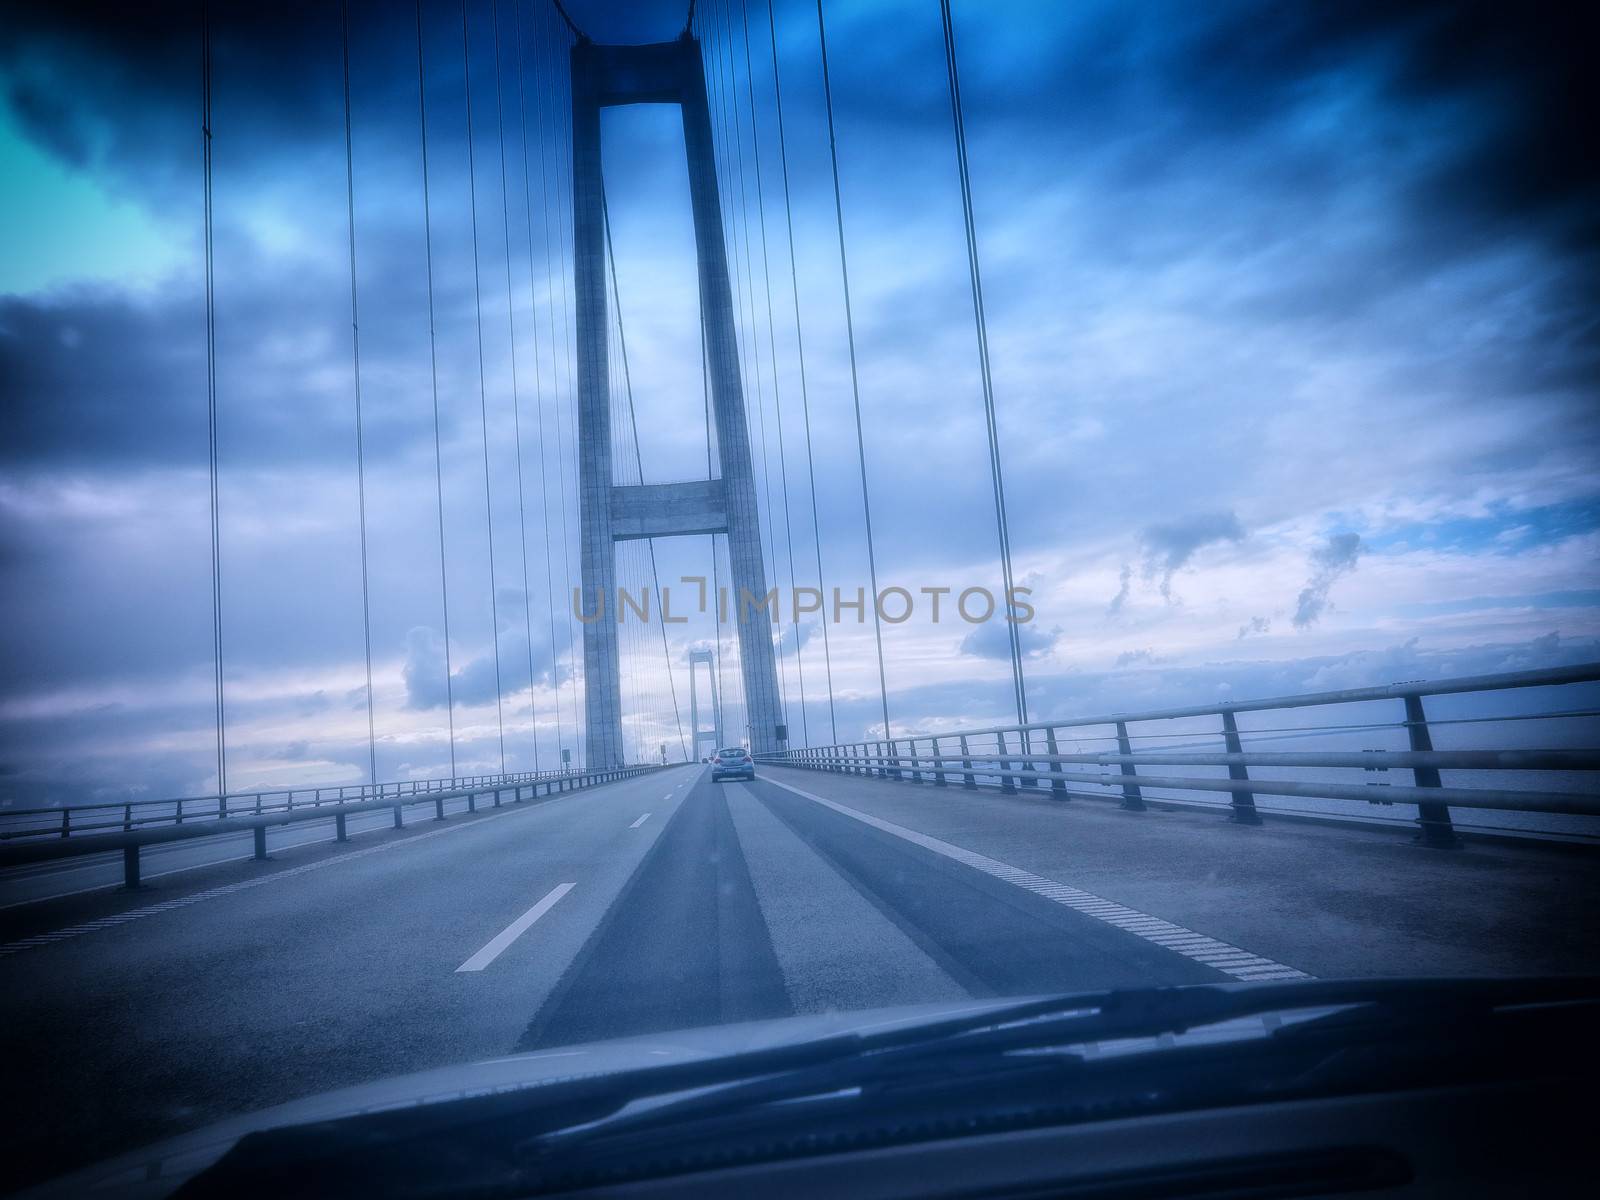 Passing the Great Belt bridge Denmark heading west.